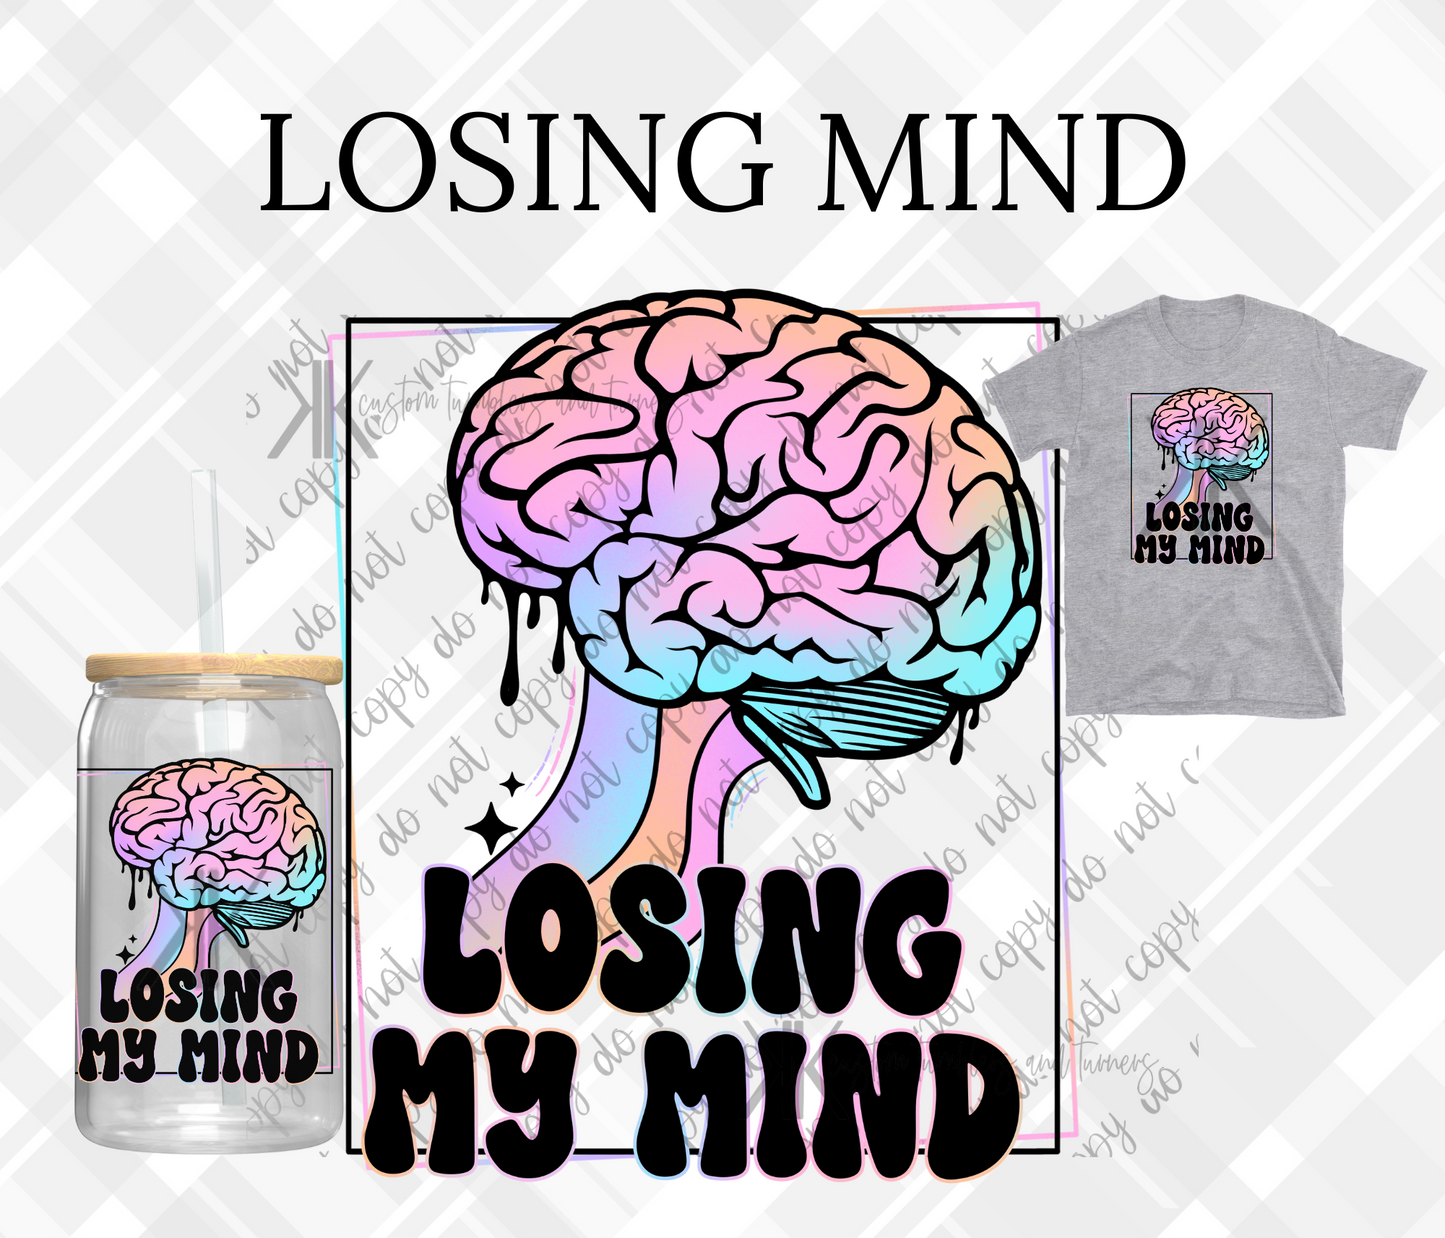 LOSING MIND